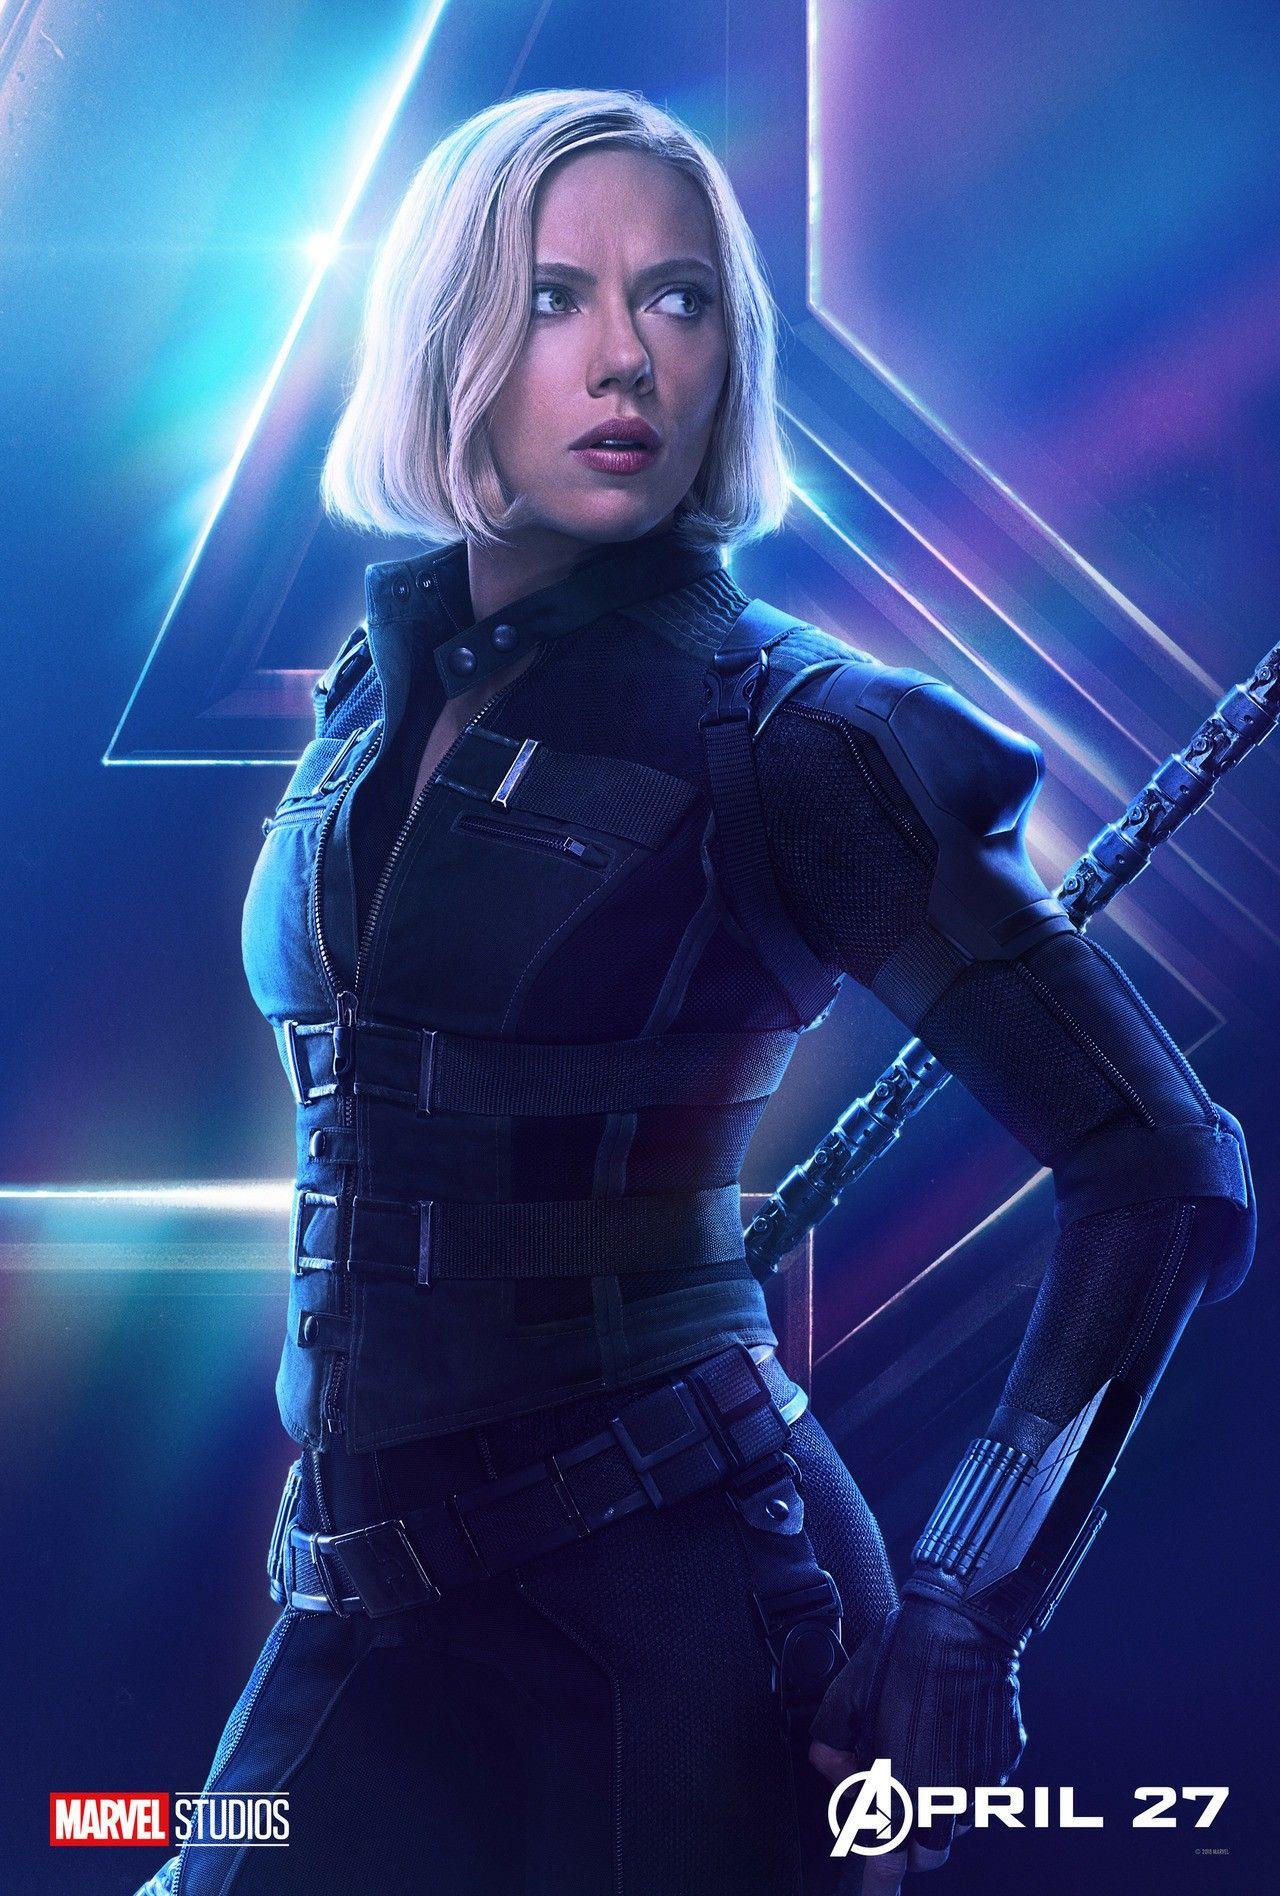 Black Widow: Avengers Infinity War Solo Poster #Marvel. MARVEL